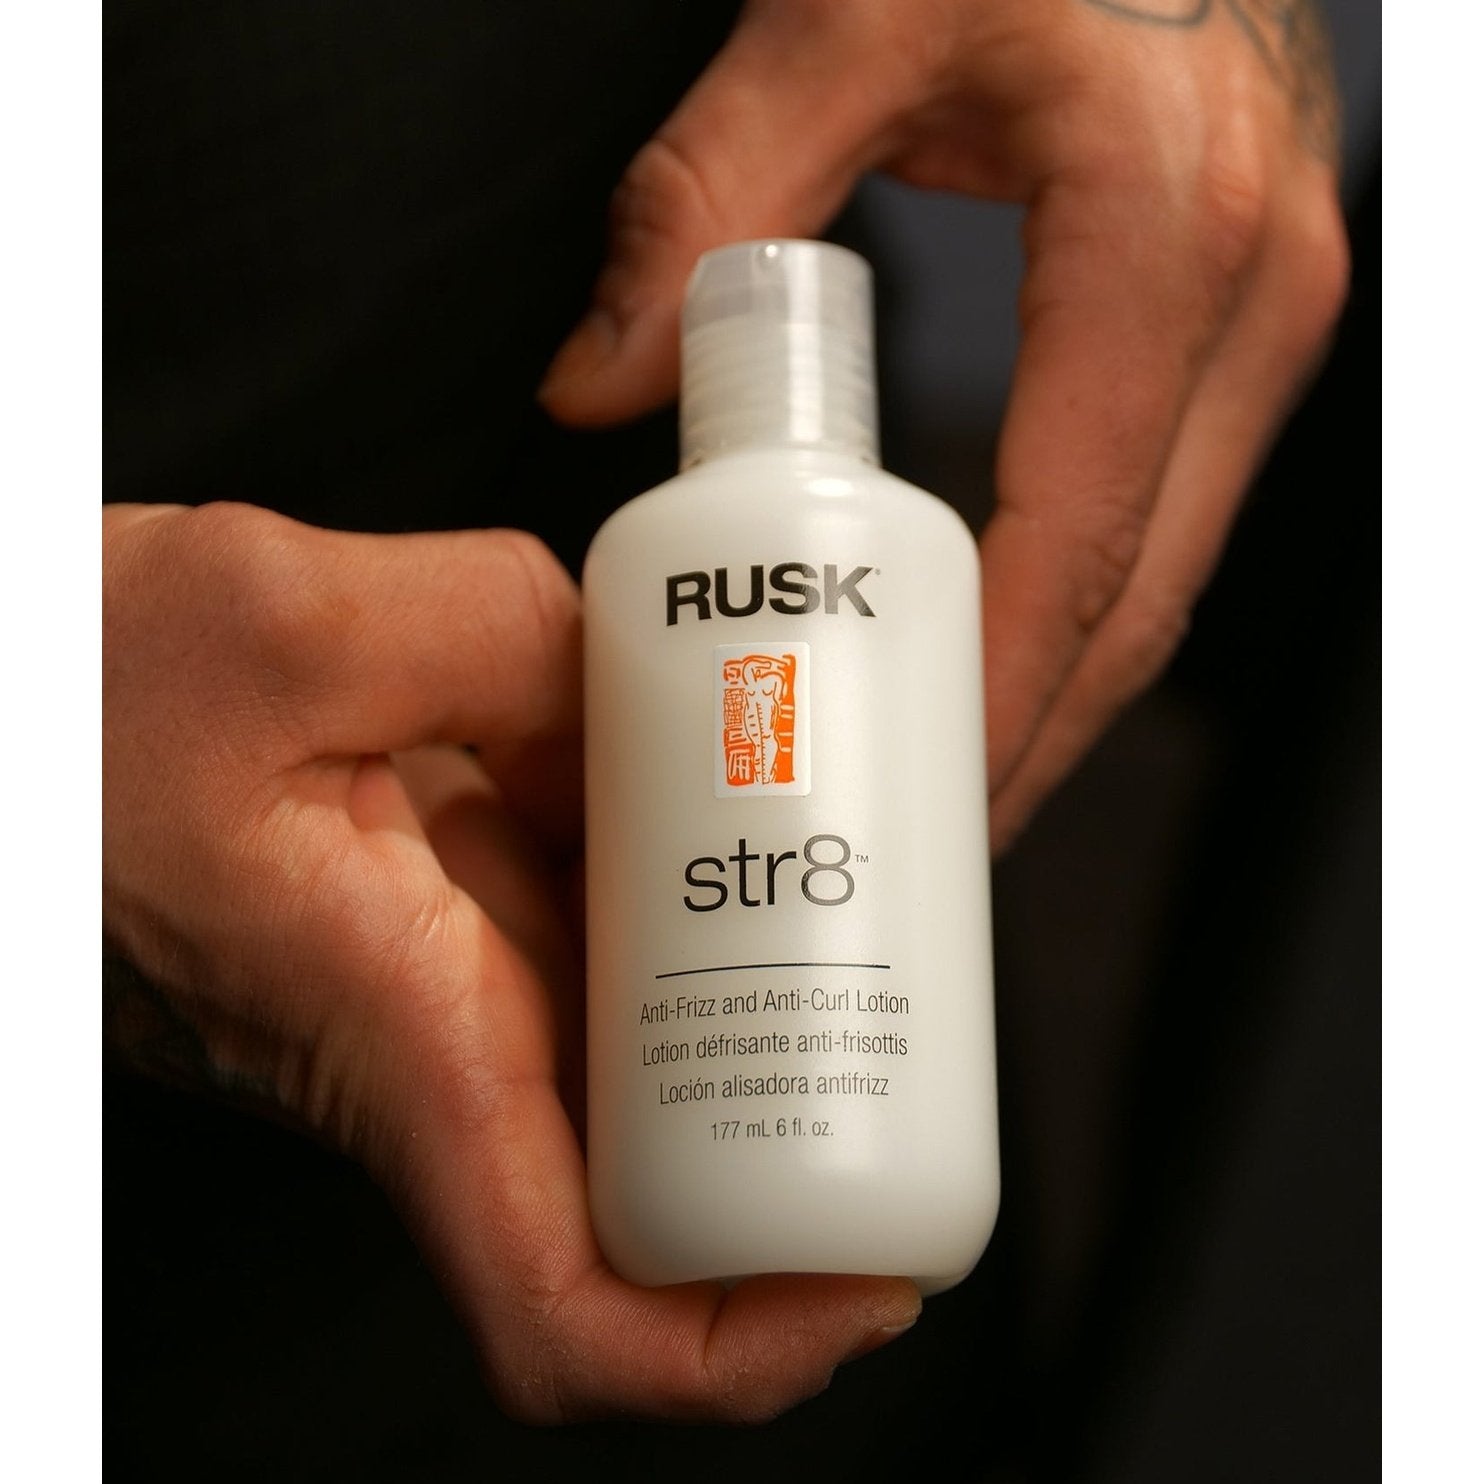 Rusk Str8 Anti-Frizz and Anti-Curl Lotion 6 oz.